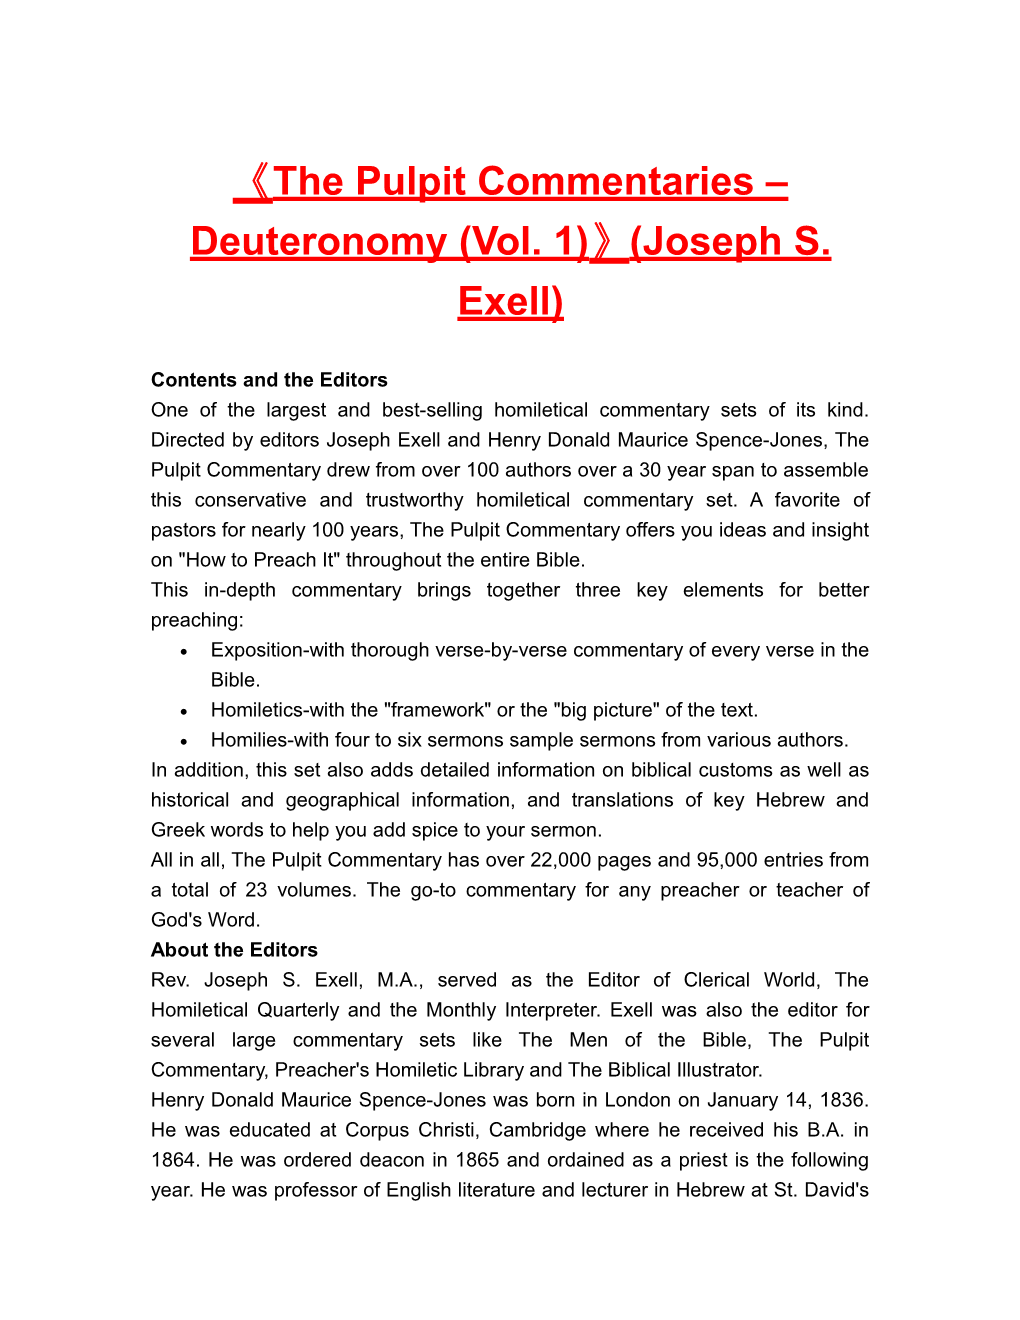 The Pulpit Commentaries Deuteronomy (Vol. 1) (Joseph S. Exell)